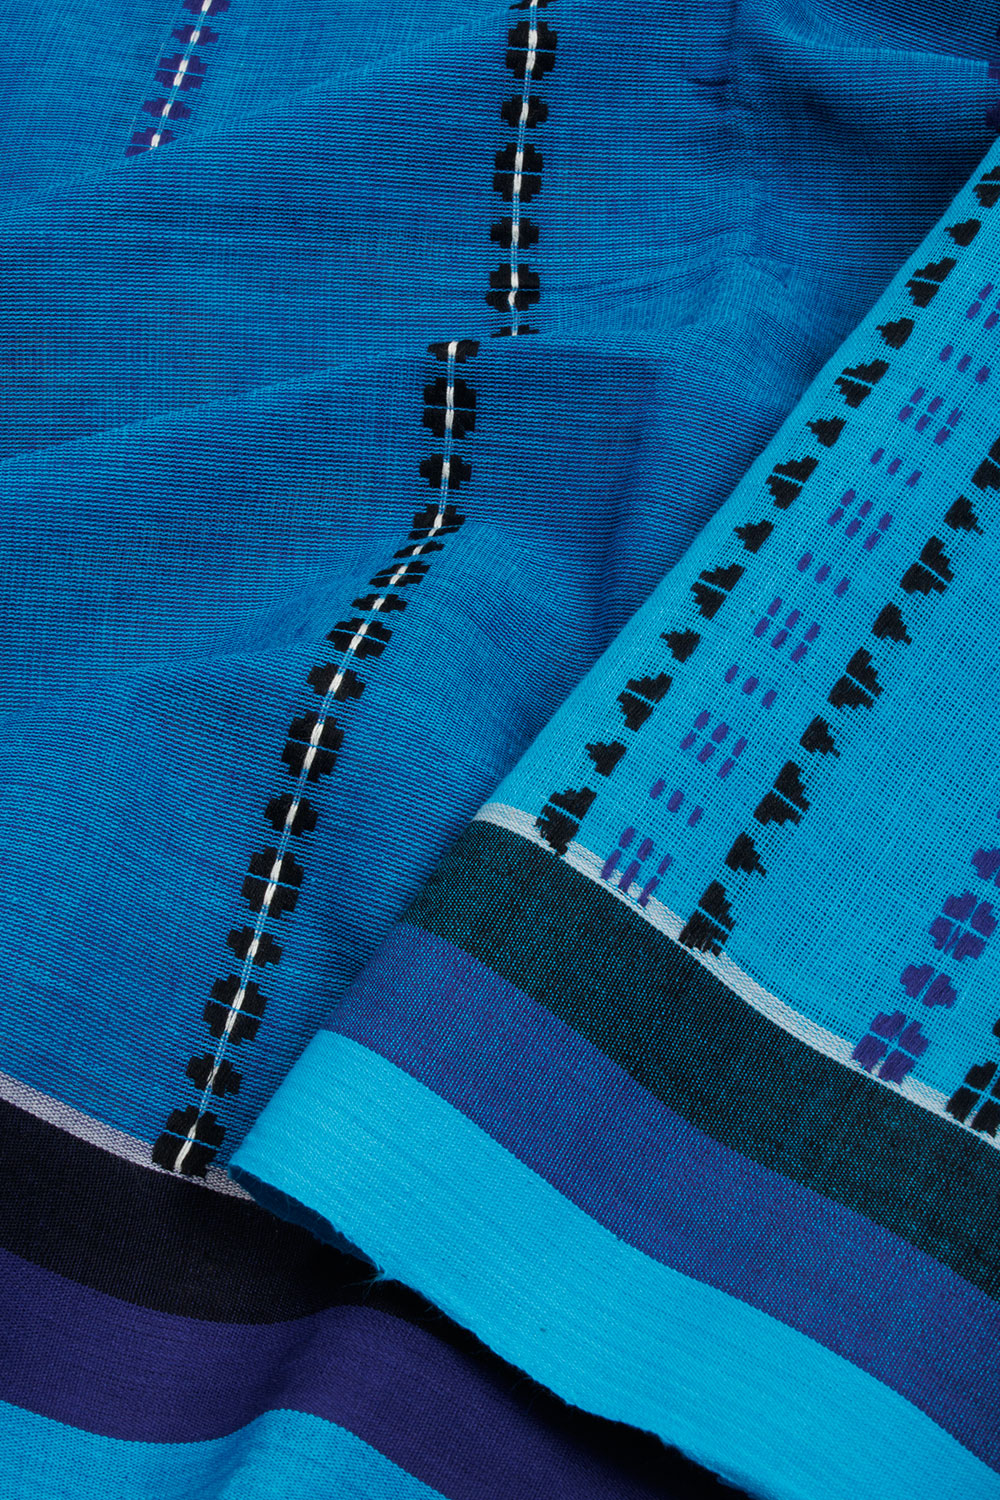 Blue Begumpuri Cotton Sarees 10068451 - Avishya